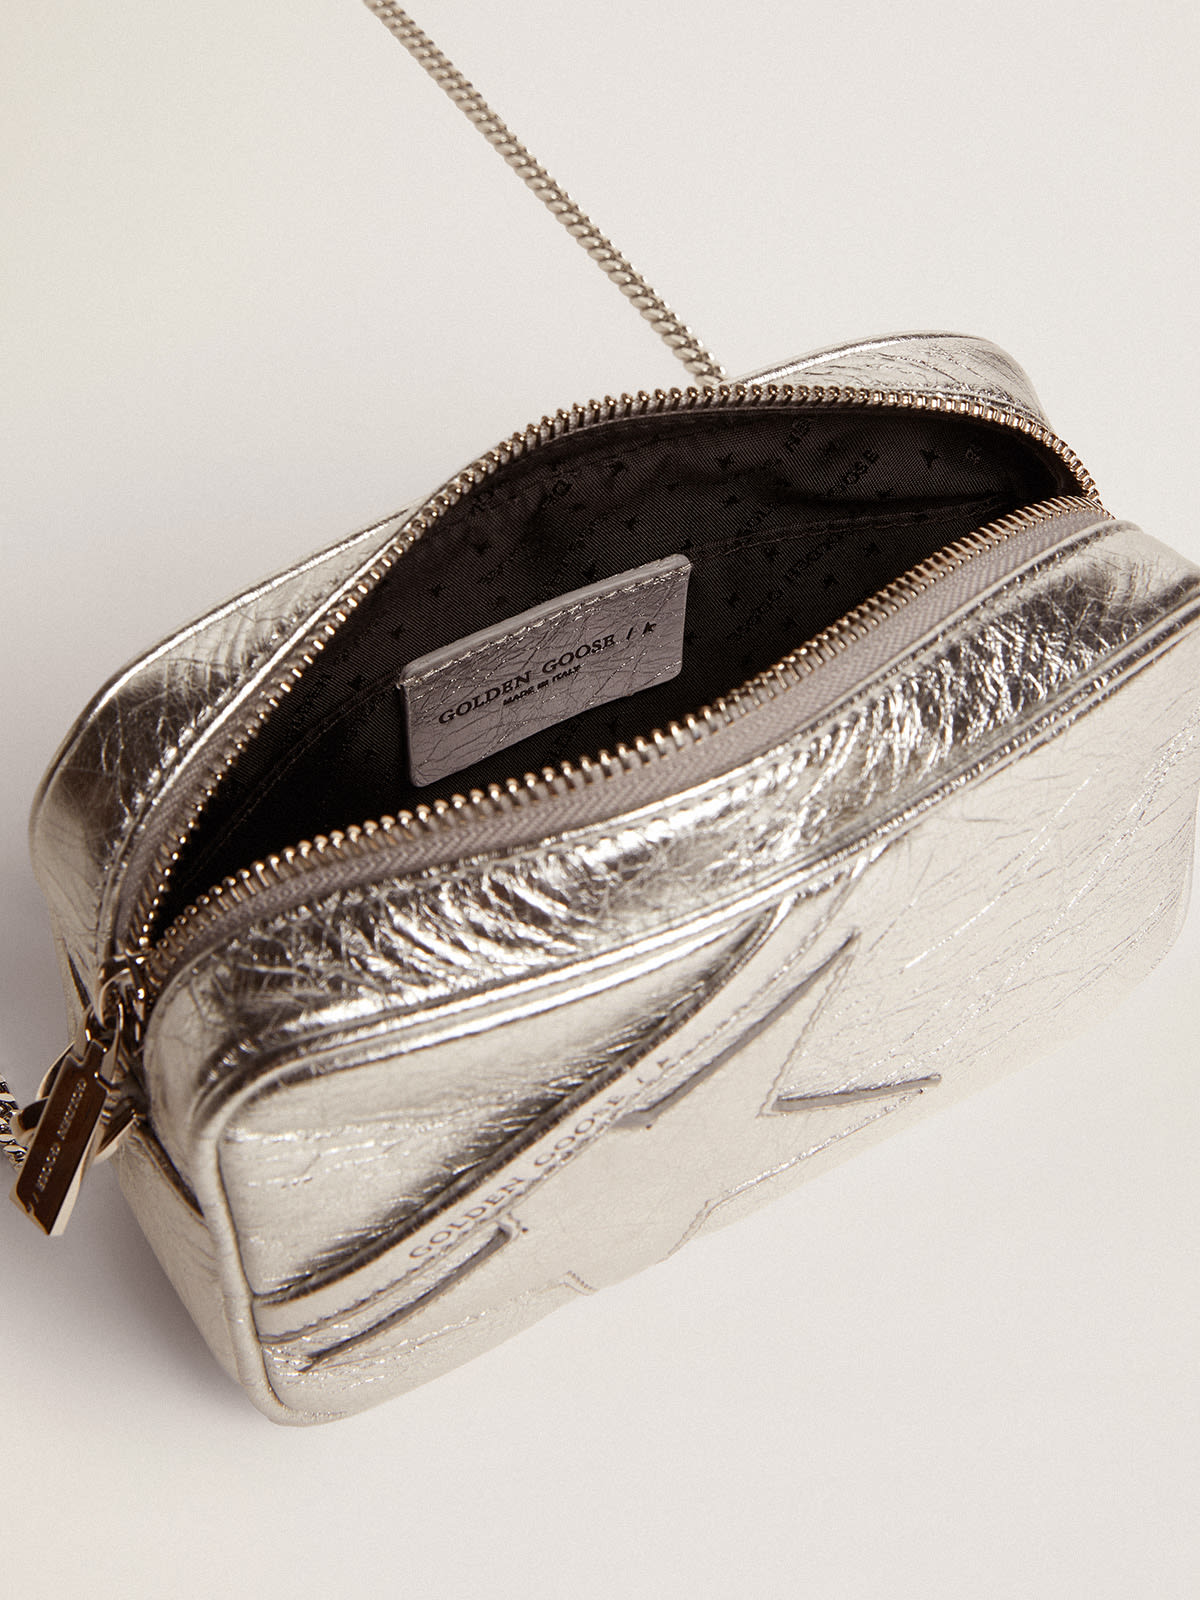 Golden Goose - Mini Star Bag aus silbernem Metallic-Leder mit Ton-in-Ton-Stern in 